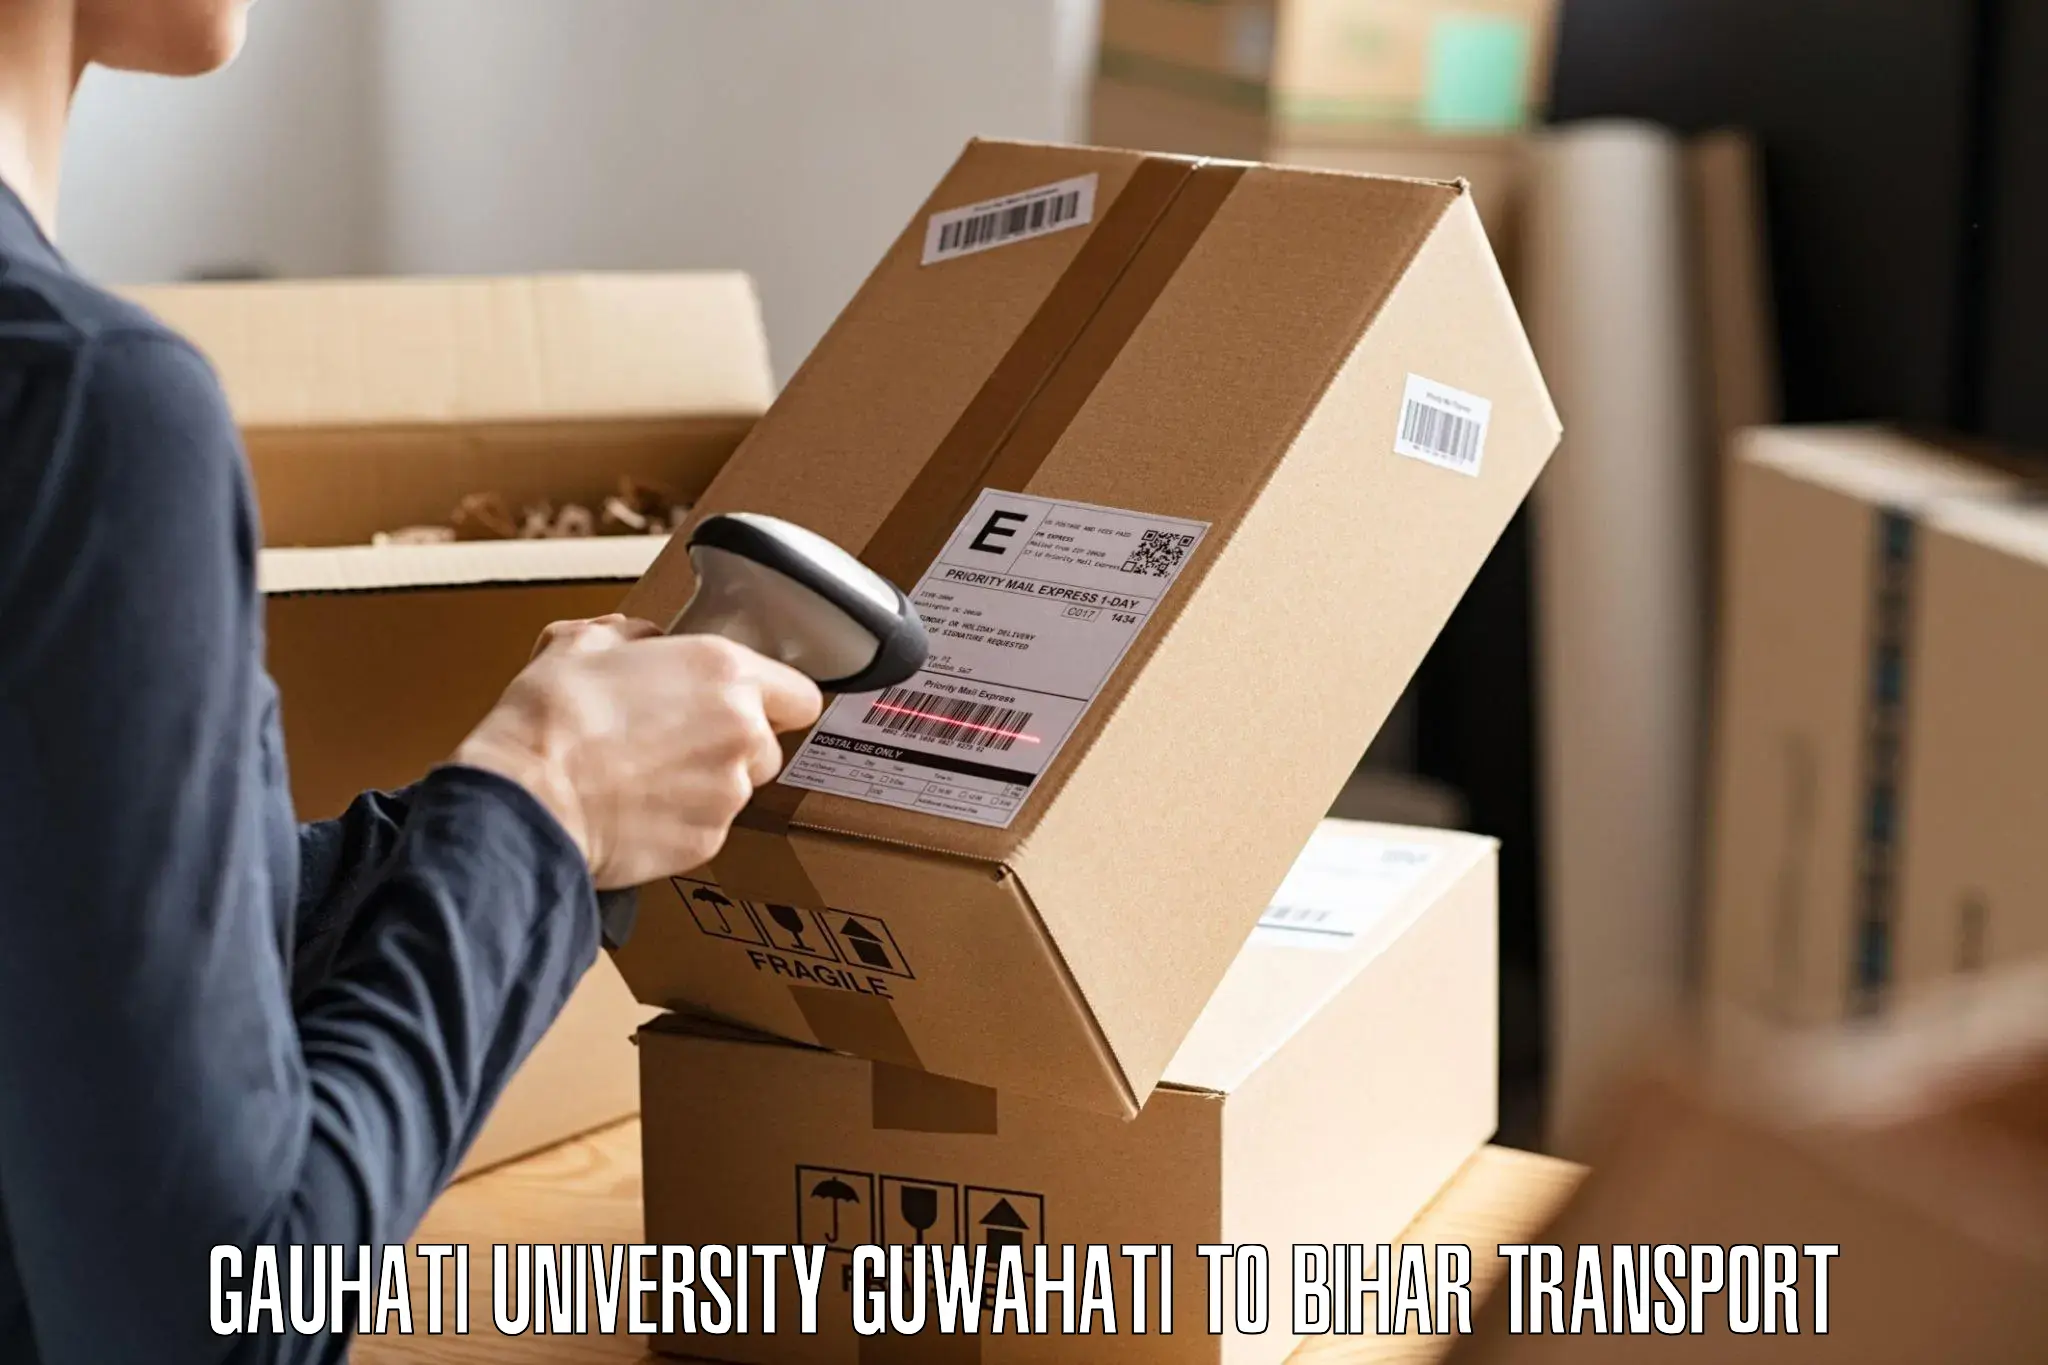 Daily transport service Gauhati University Guwahati to Motipur